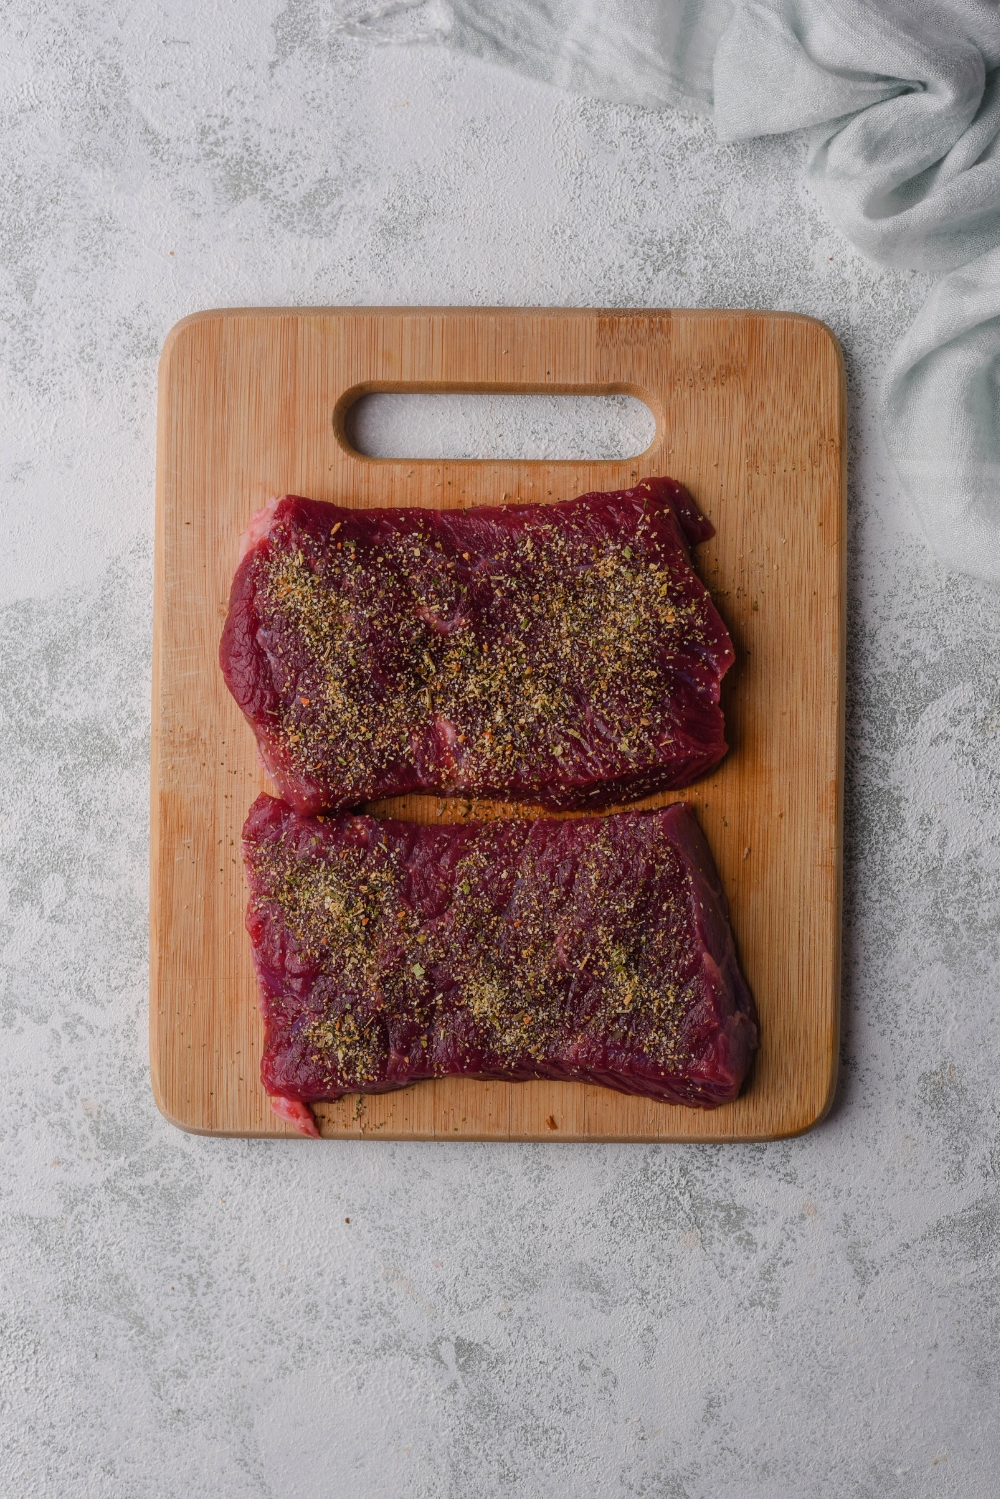 Two raw seasoned flat iron steaks on a wood cutting board.